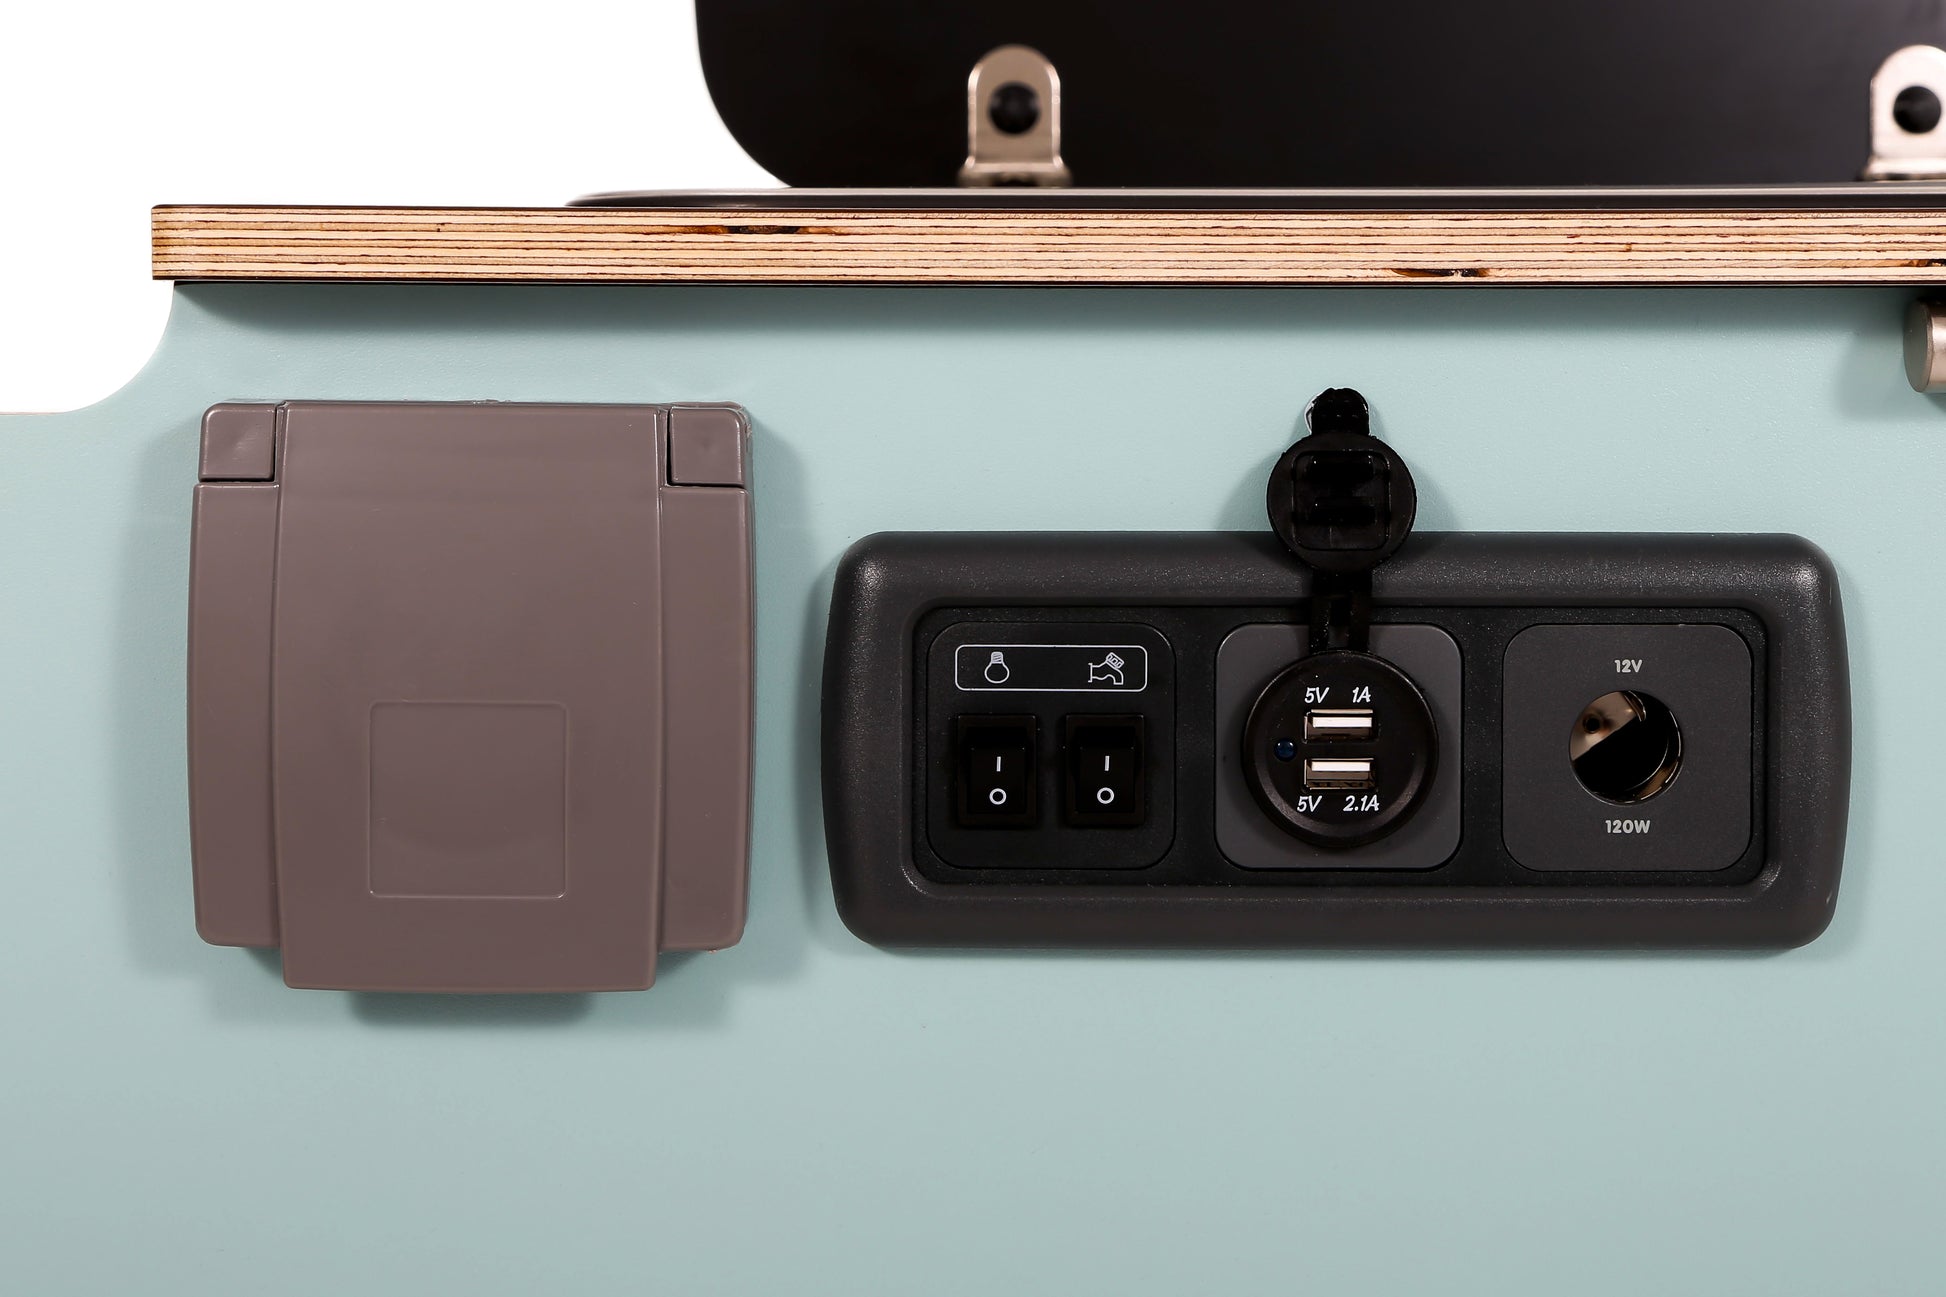 Double USB sockets - Slidepods shop